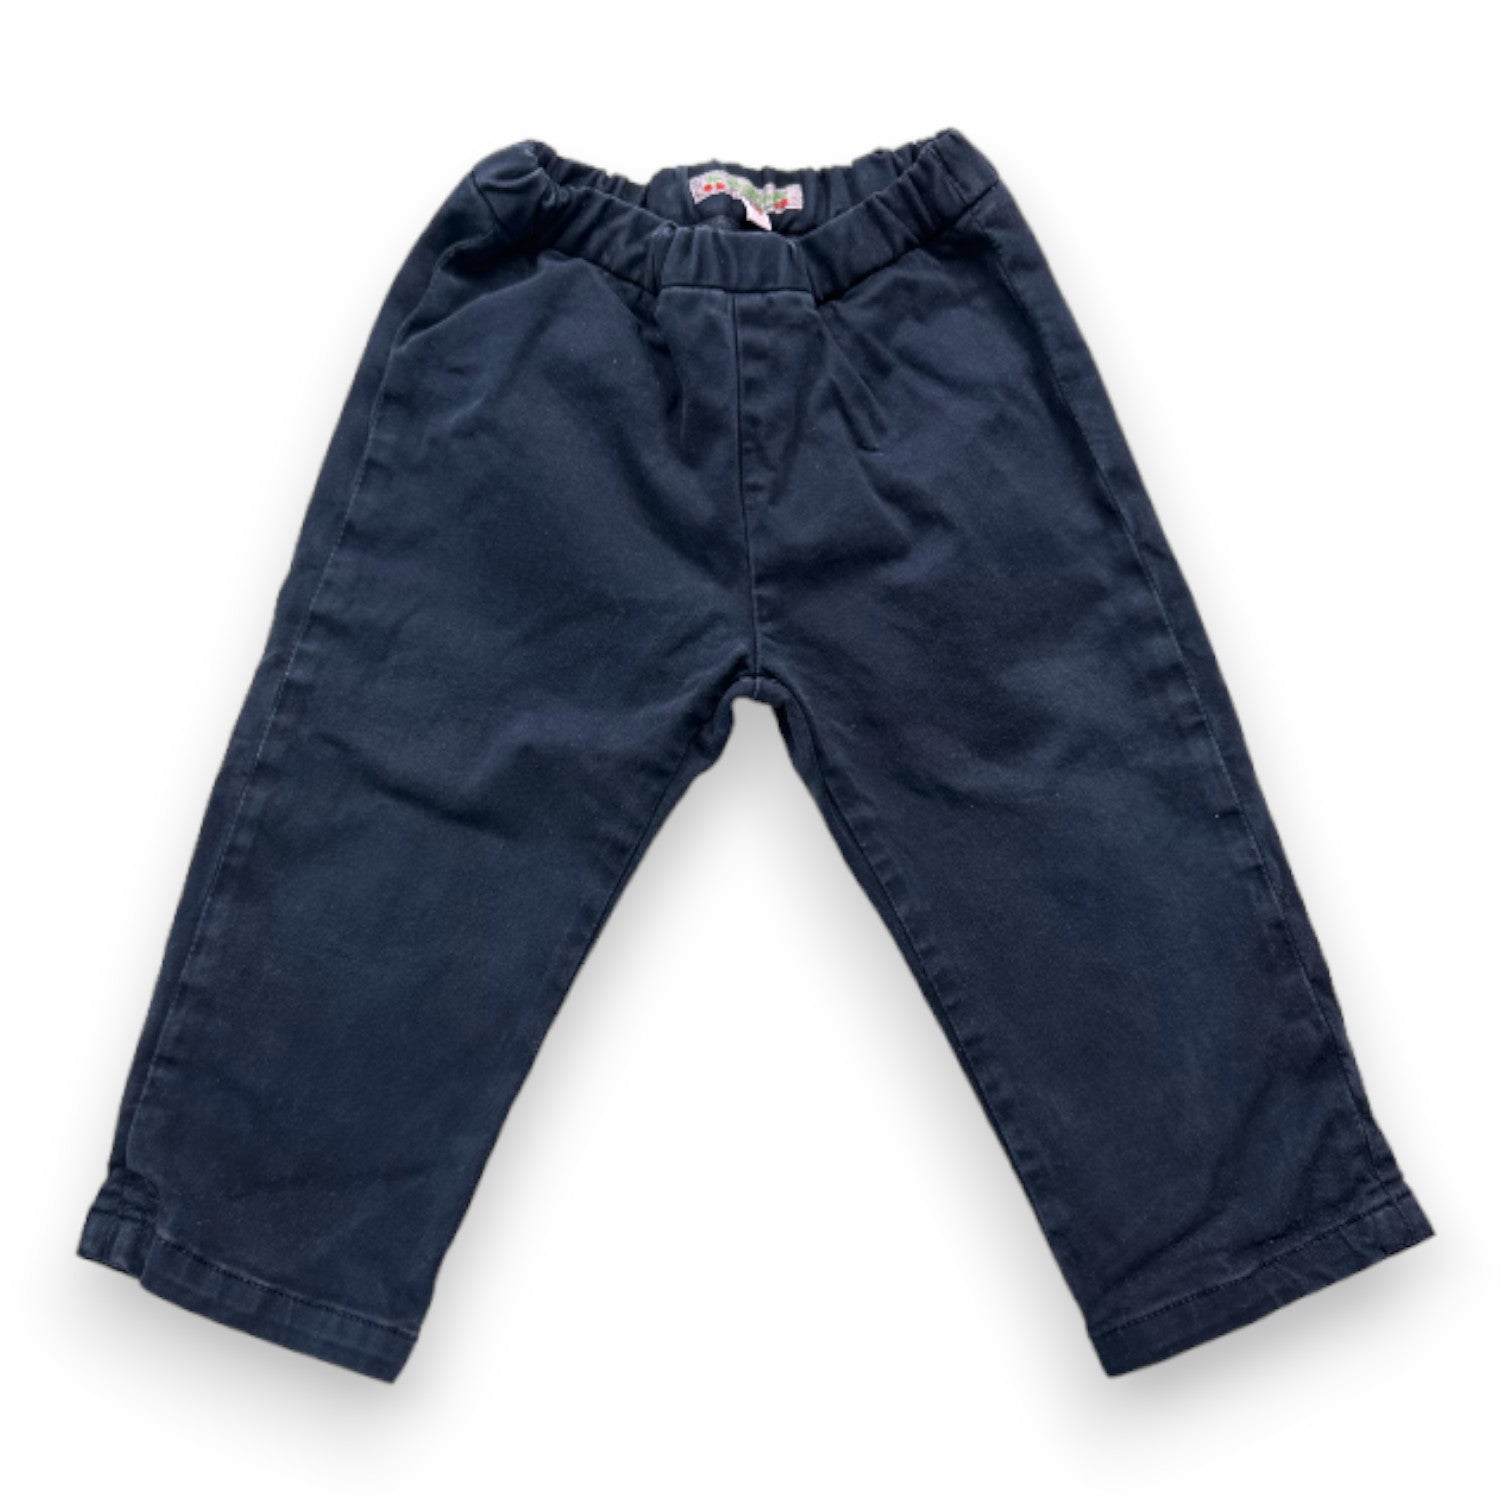 BONPOINT - Pantalon bleu - 18 mois